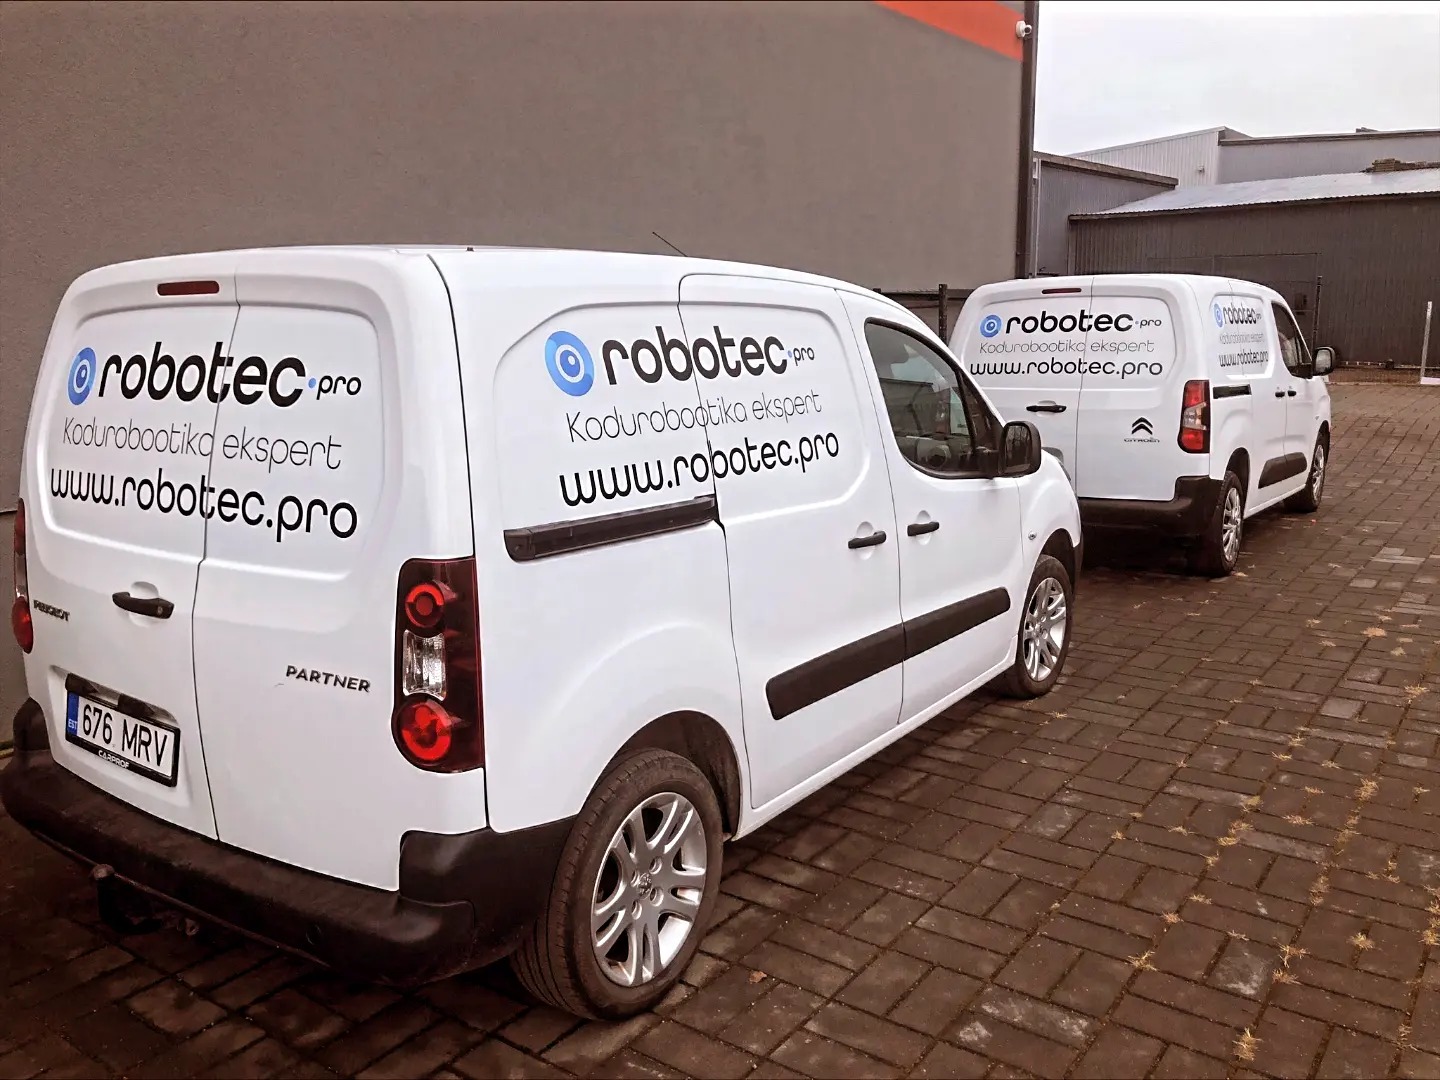 We offer Robot Mower installation service for all brands